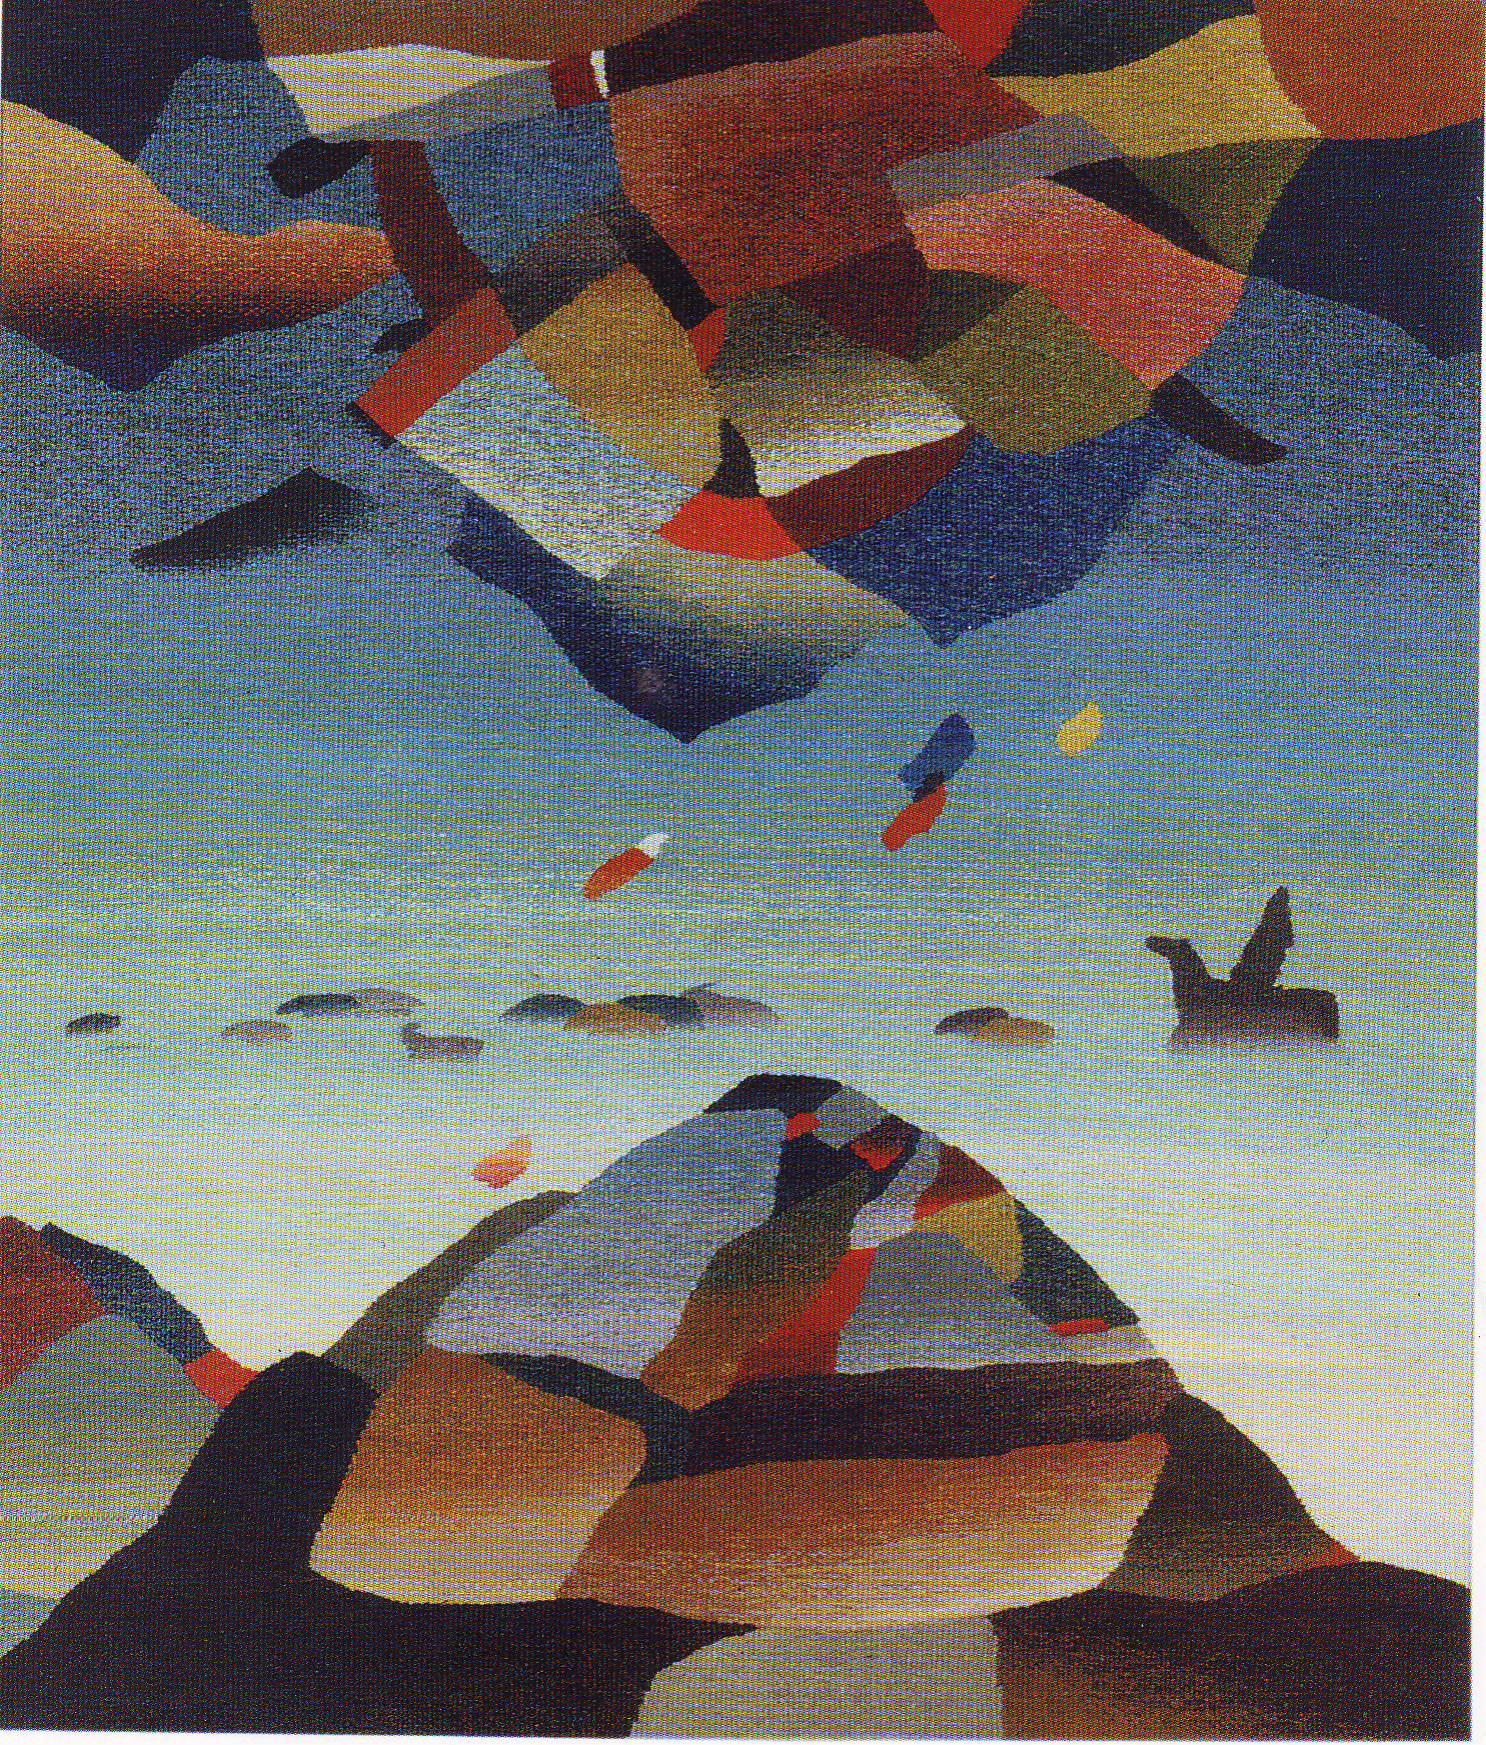 空间 by Alibay and Saule Bapanova - 1994 - 144 x 124 cm 